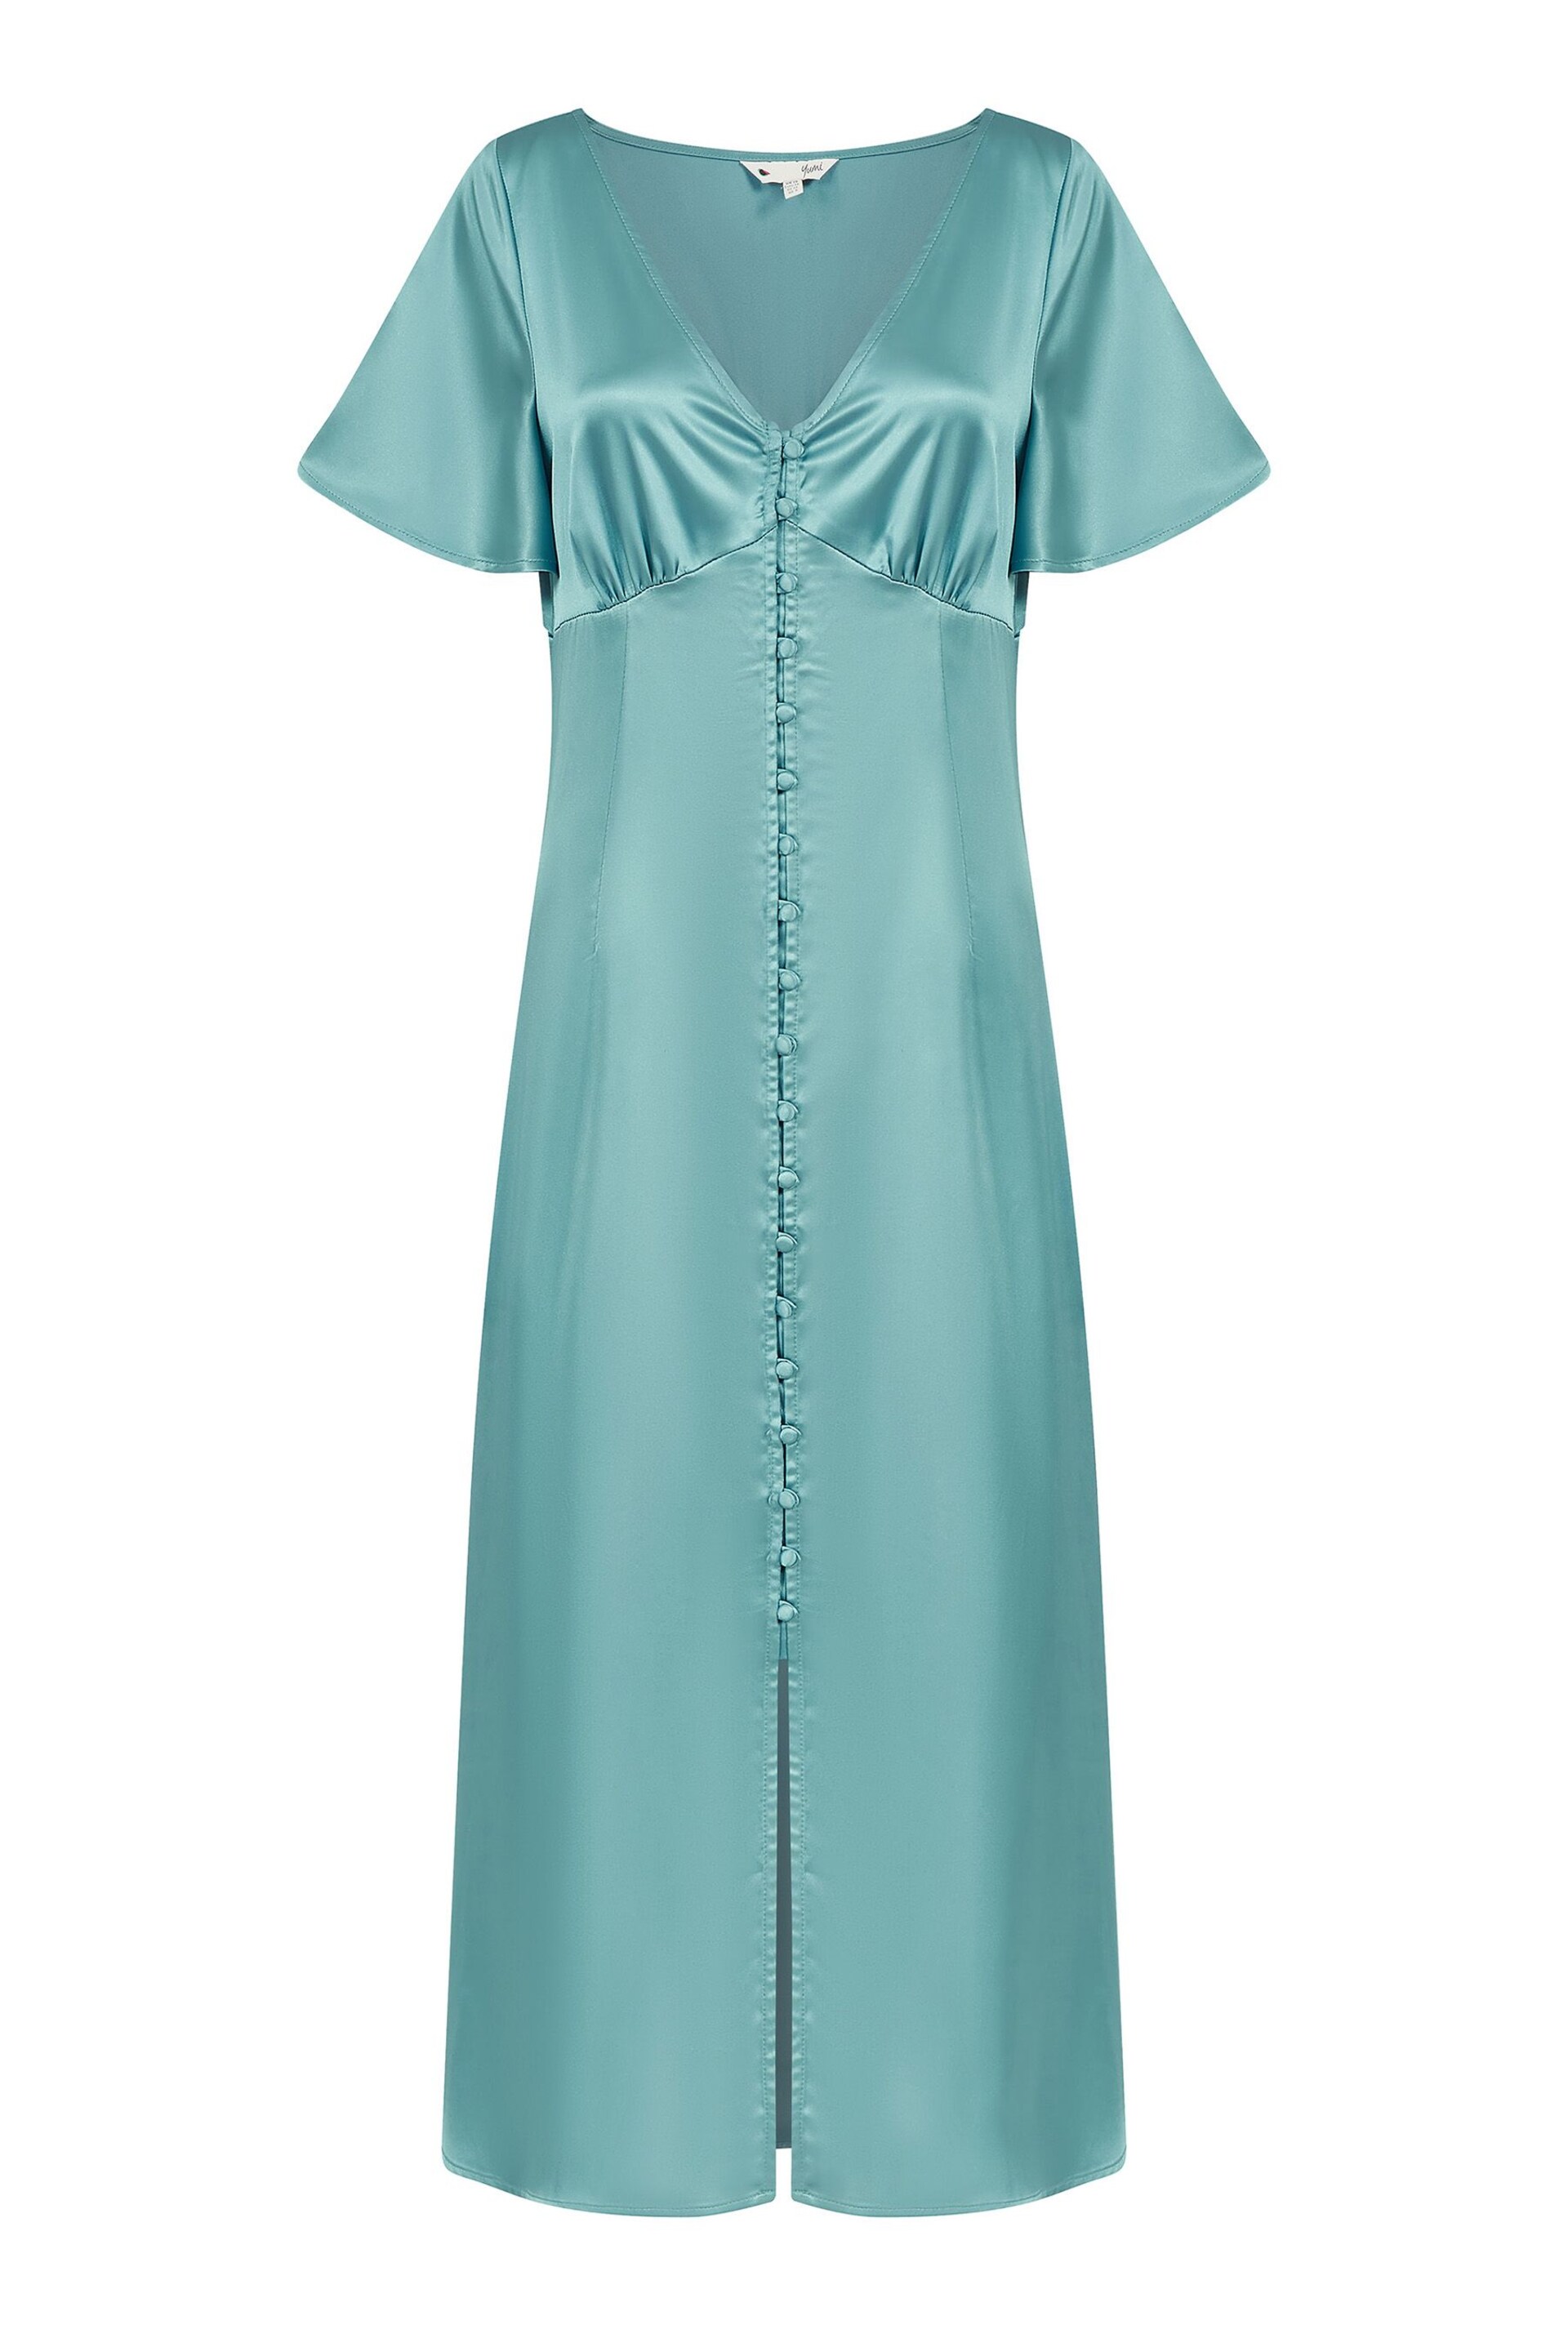 Yumi Blue Satin Button Down Dress - Image 4 of 4